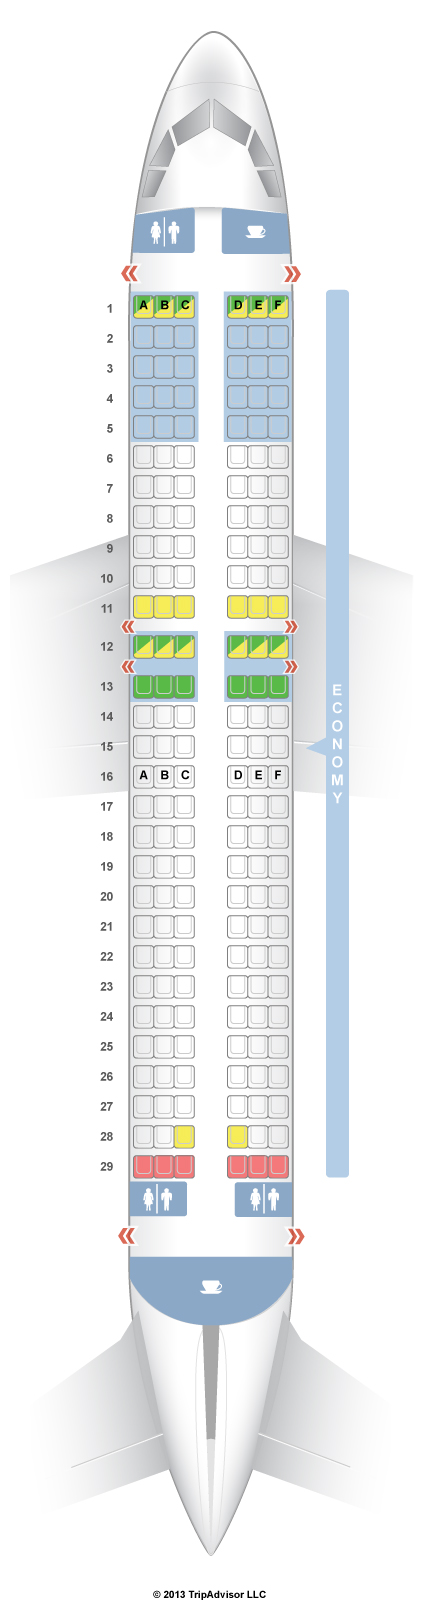 Volaris Seating Chart